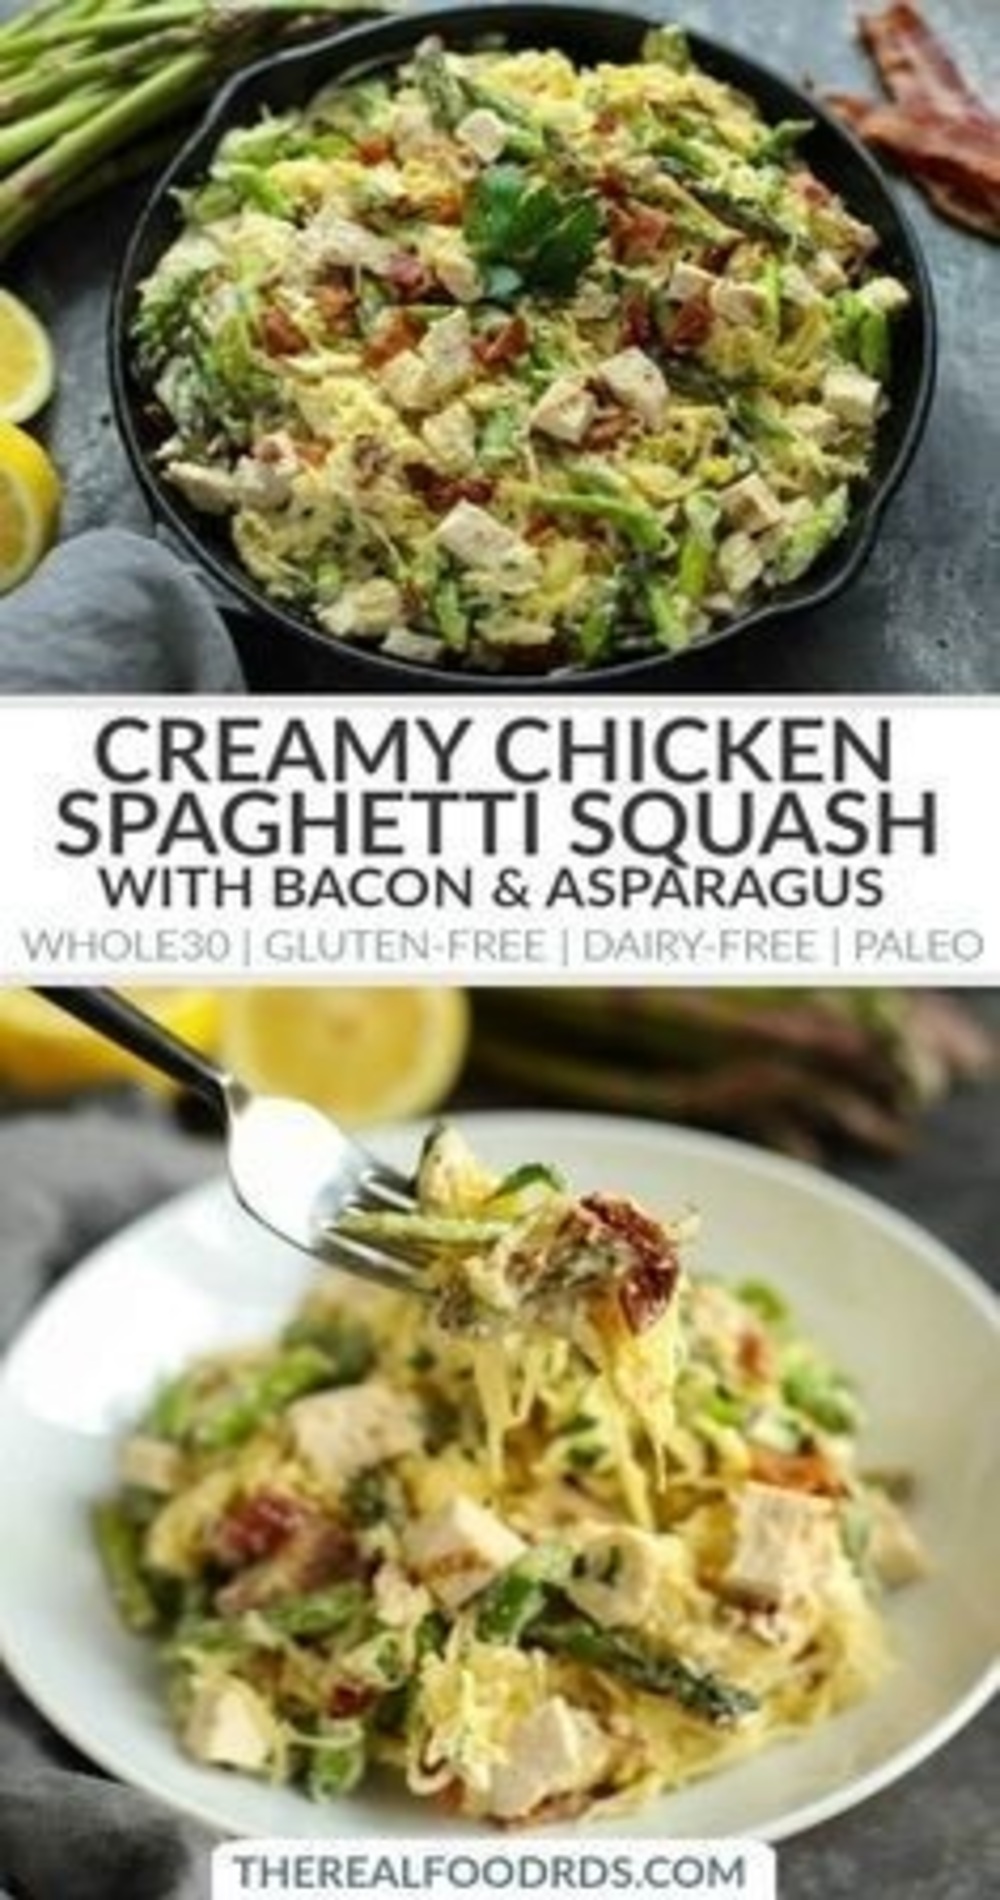 Creamy Chicken Spaghetti Squash with Asparagus